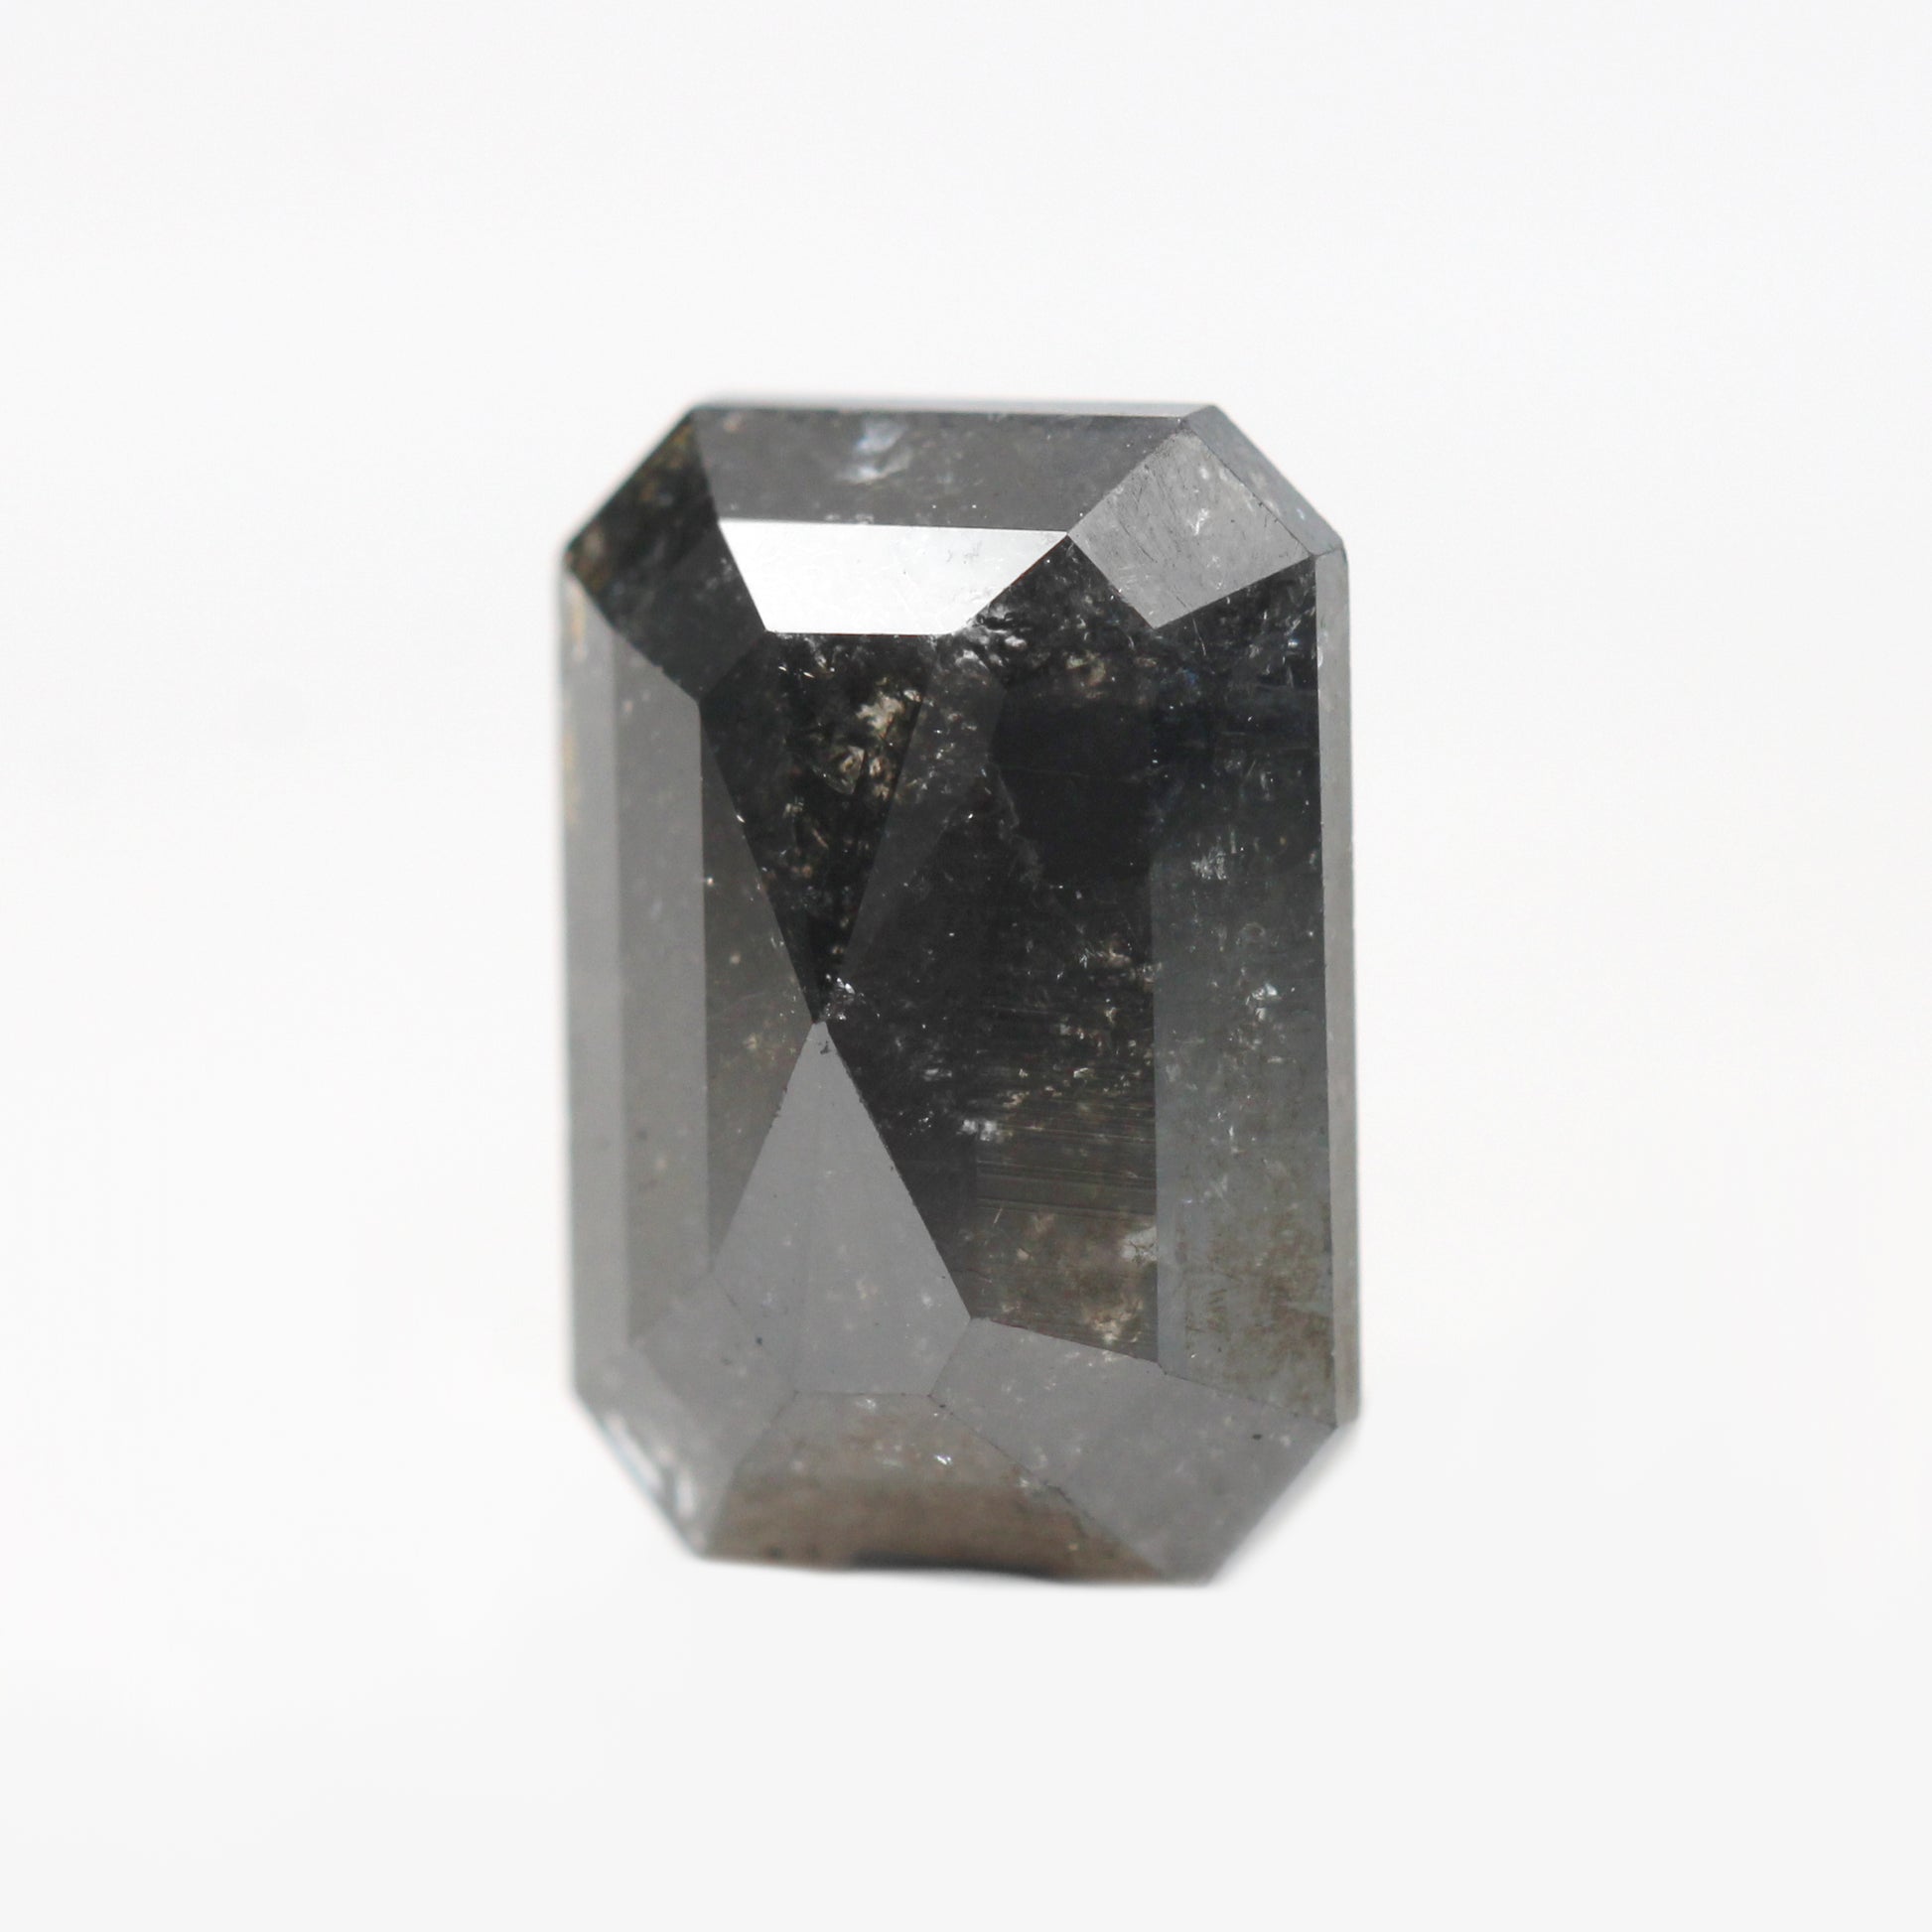 1.74 Carat Emerald Cut Black Celestial Diamond for Custom Work - Inventory Code NBE174 - Midwinter Co. Alternative Bridal Rings and Modern Fine Jewelry